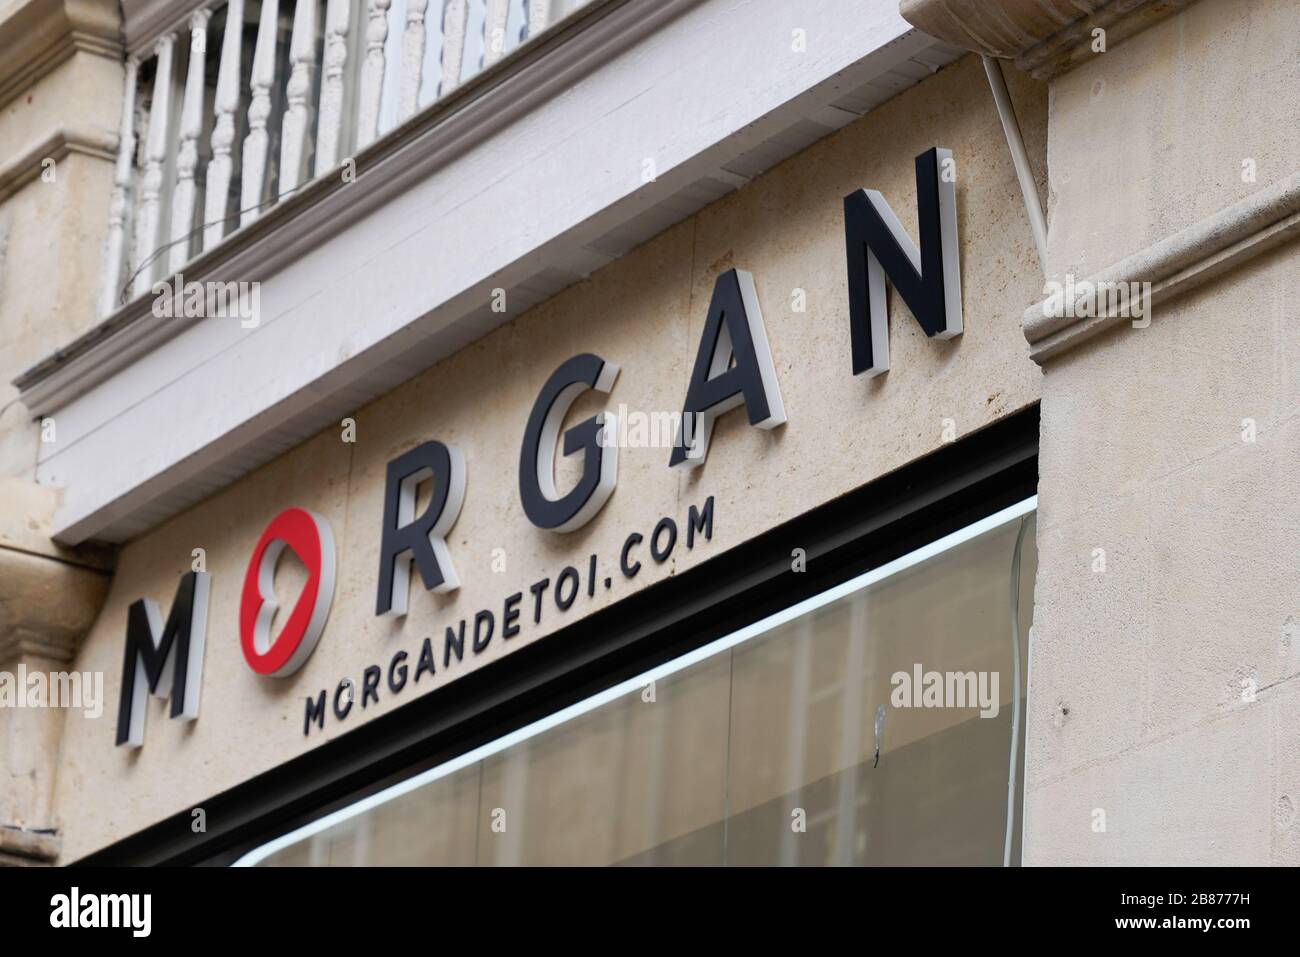 Bordeaux, Aquitanien/Frankreich - 10 28 2019 : Morgan Shop Retail Logo  Damen Bekleidung Mode Storefront Sign Morgan de Toi bedeutet auf Englisch  Morgan for Stockfotografie - Alamy